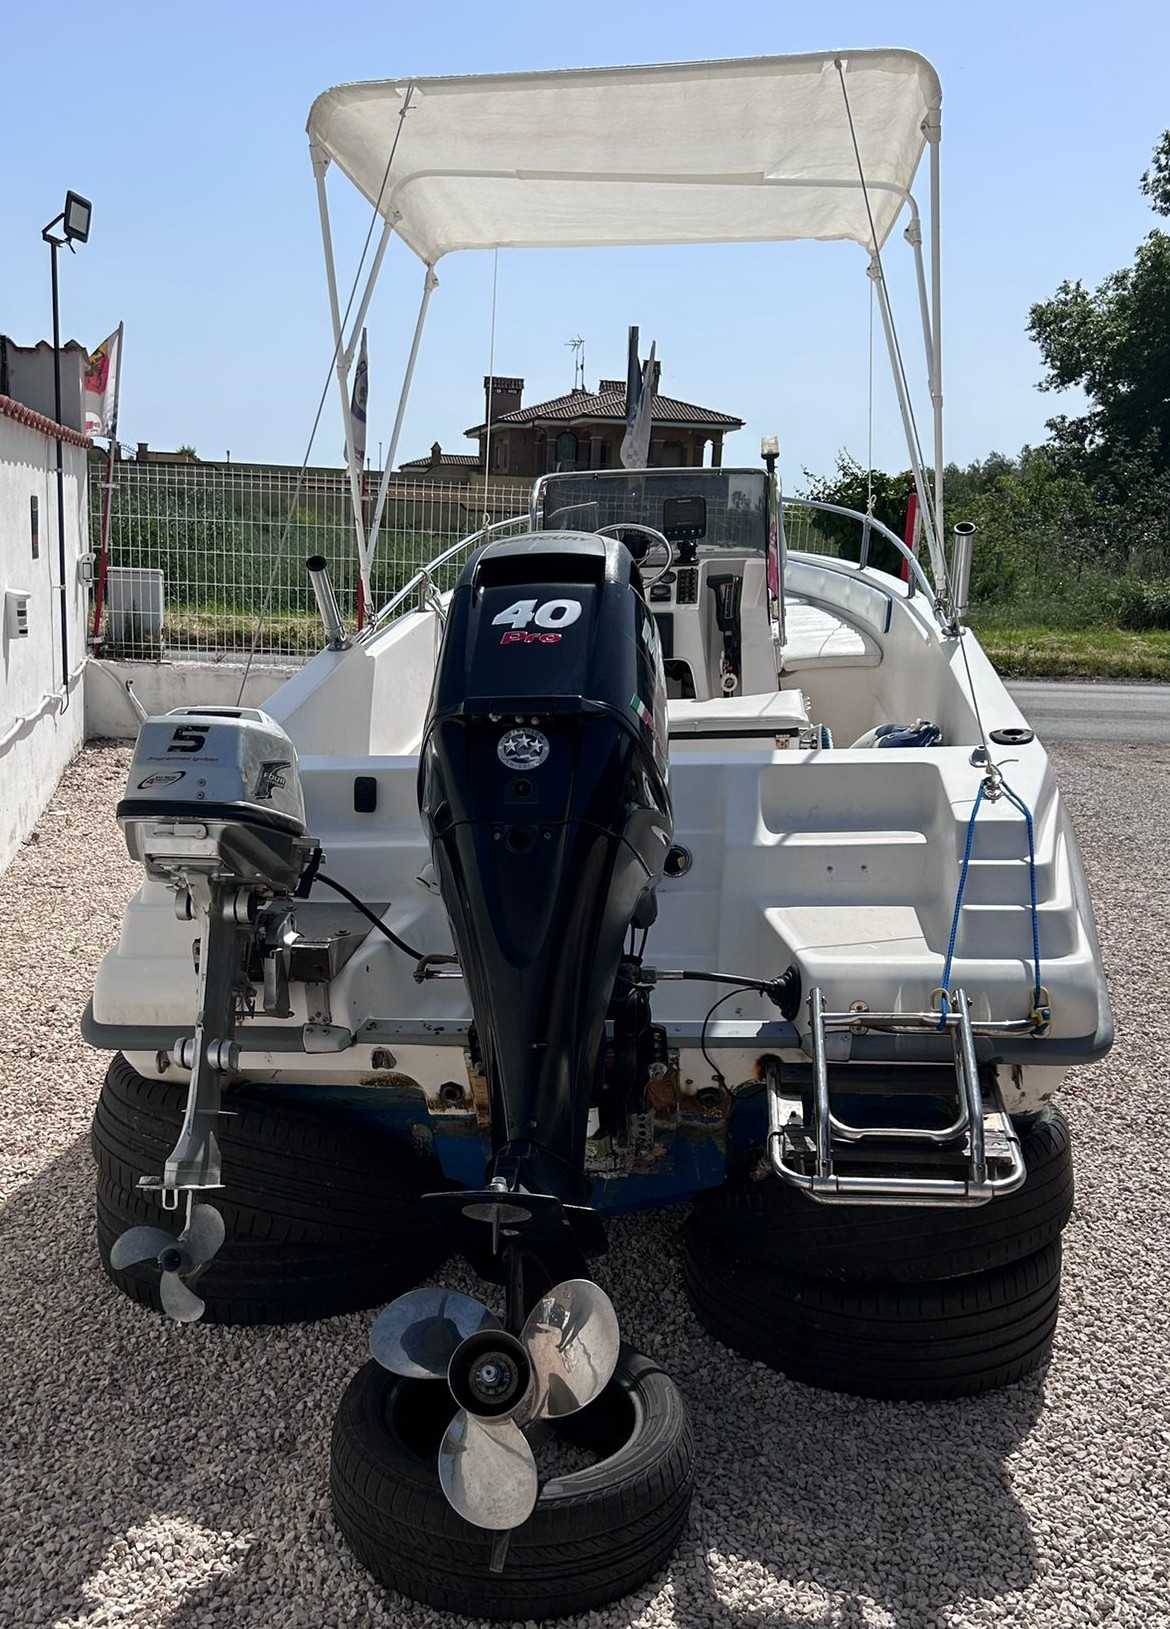 Nostromo 25 + 2x140 hp VM gavazzi pilotina natante livorno boats barco bateaux boat pilot house entrobordo diesel pesca crociera diporto